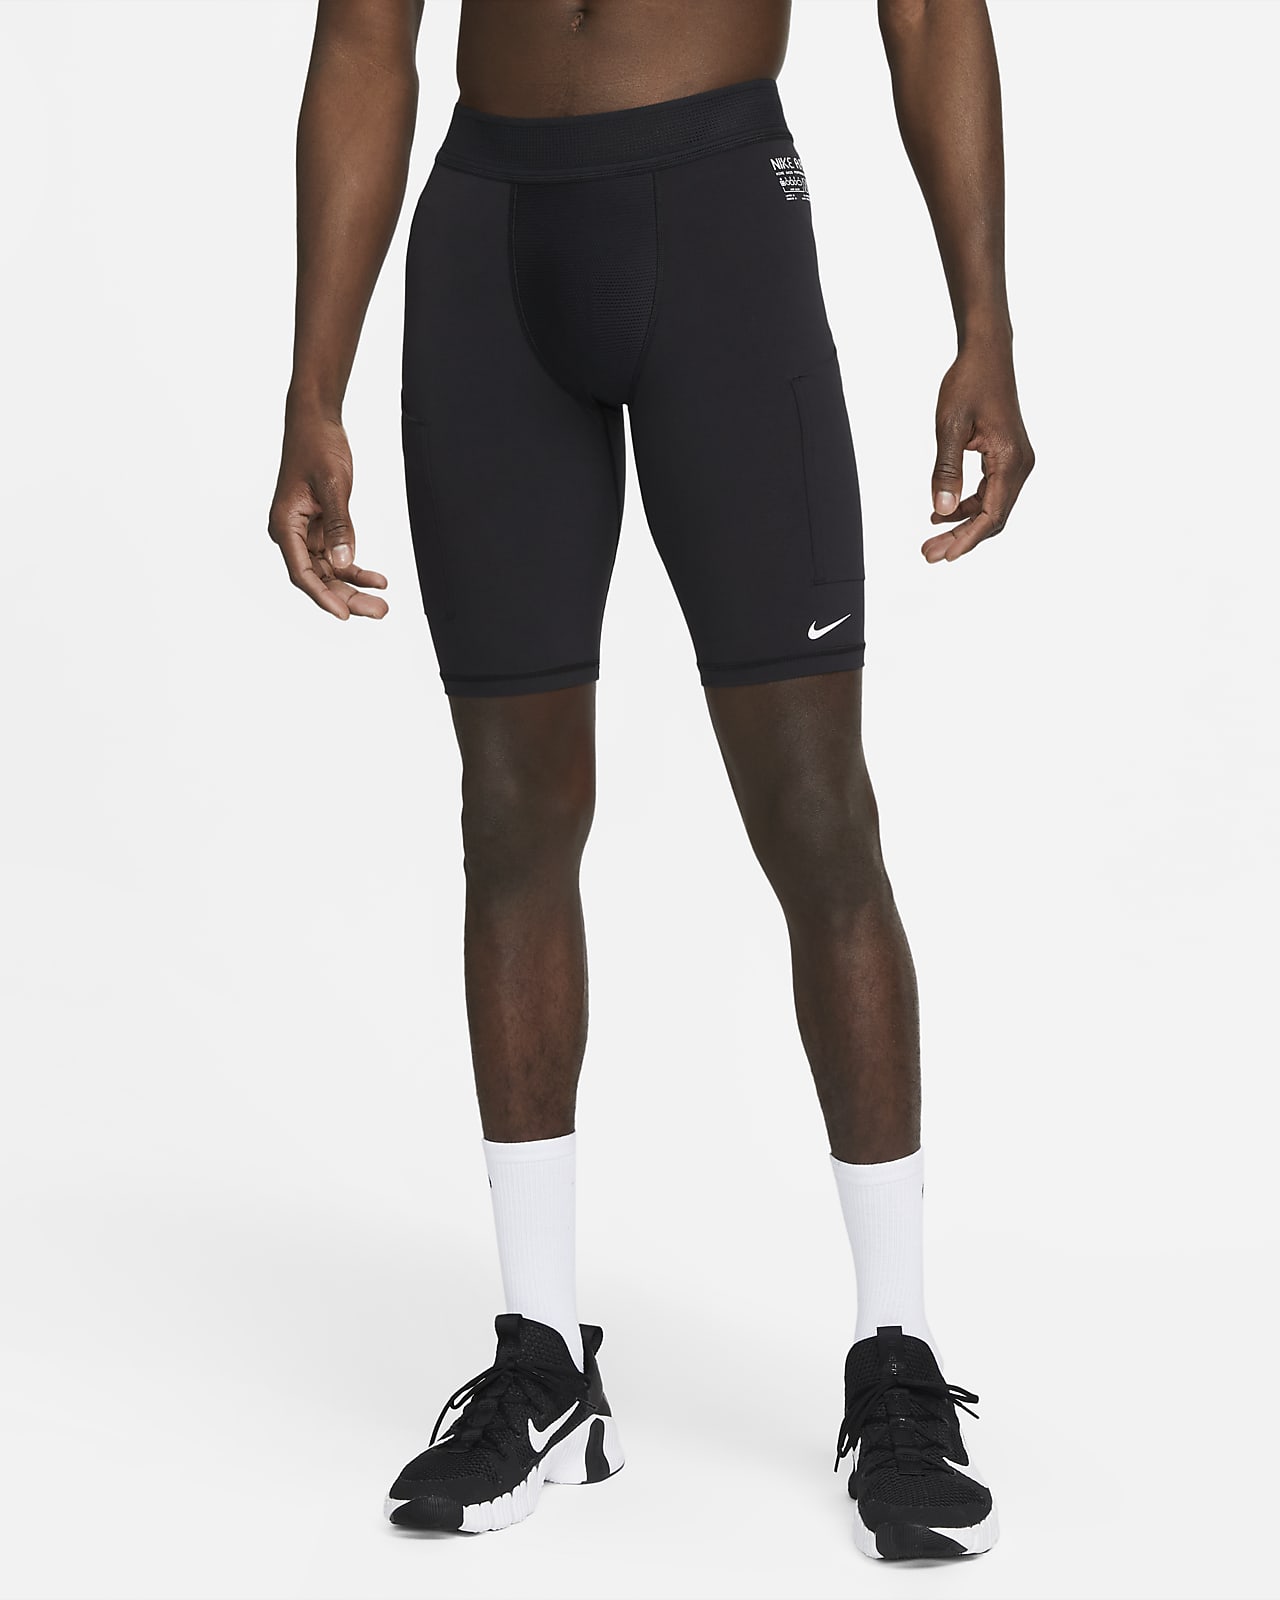  Nike - Men's Athletic Shorts / Men's Activewear